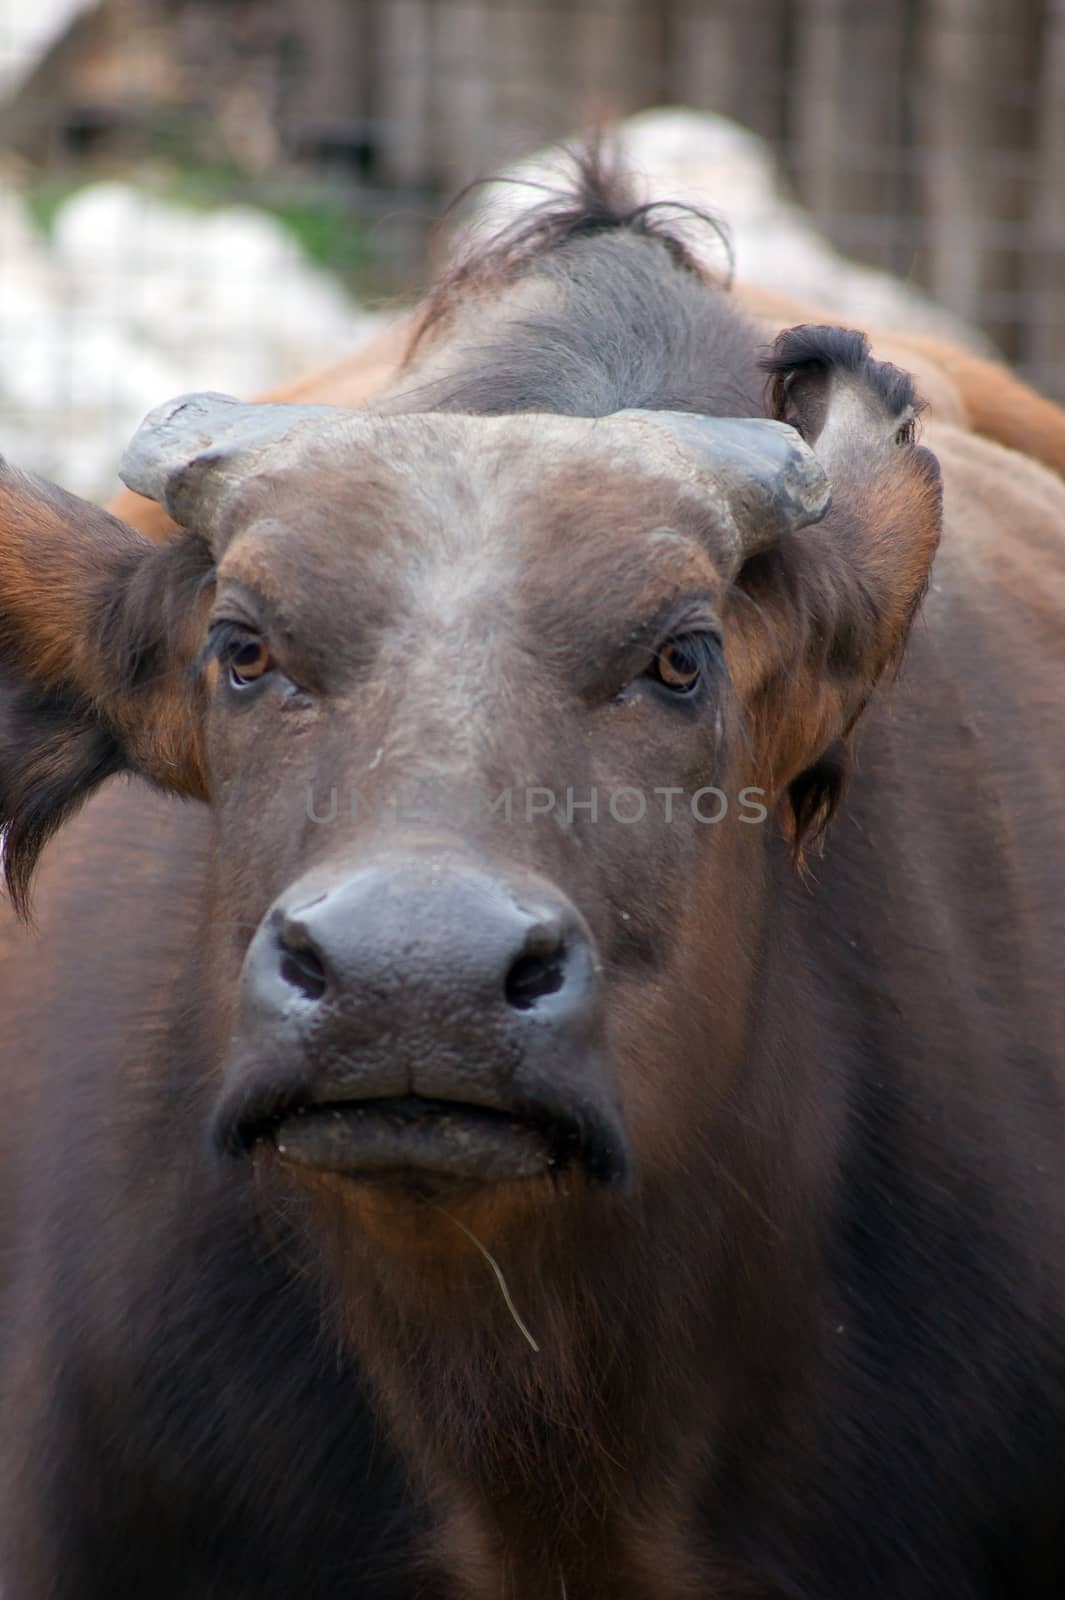 American bison by dadalia